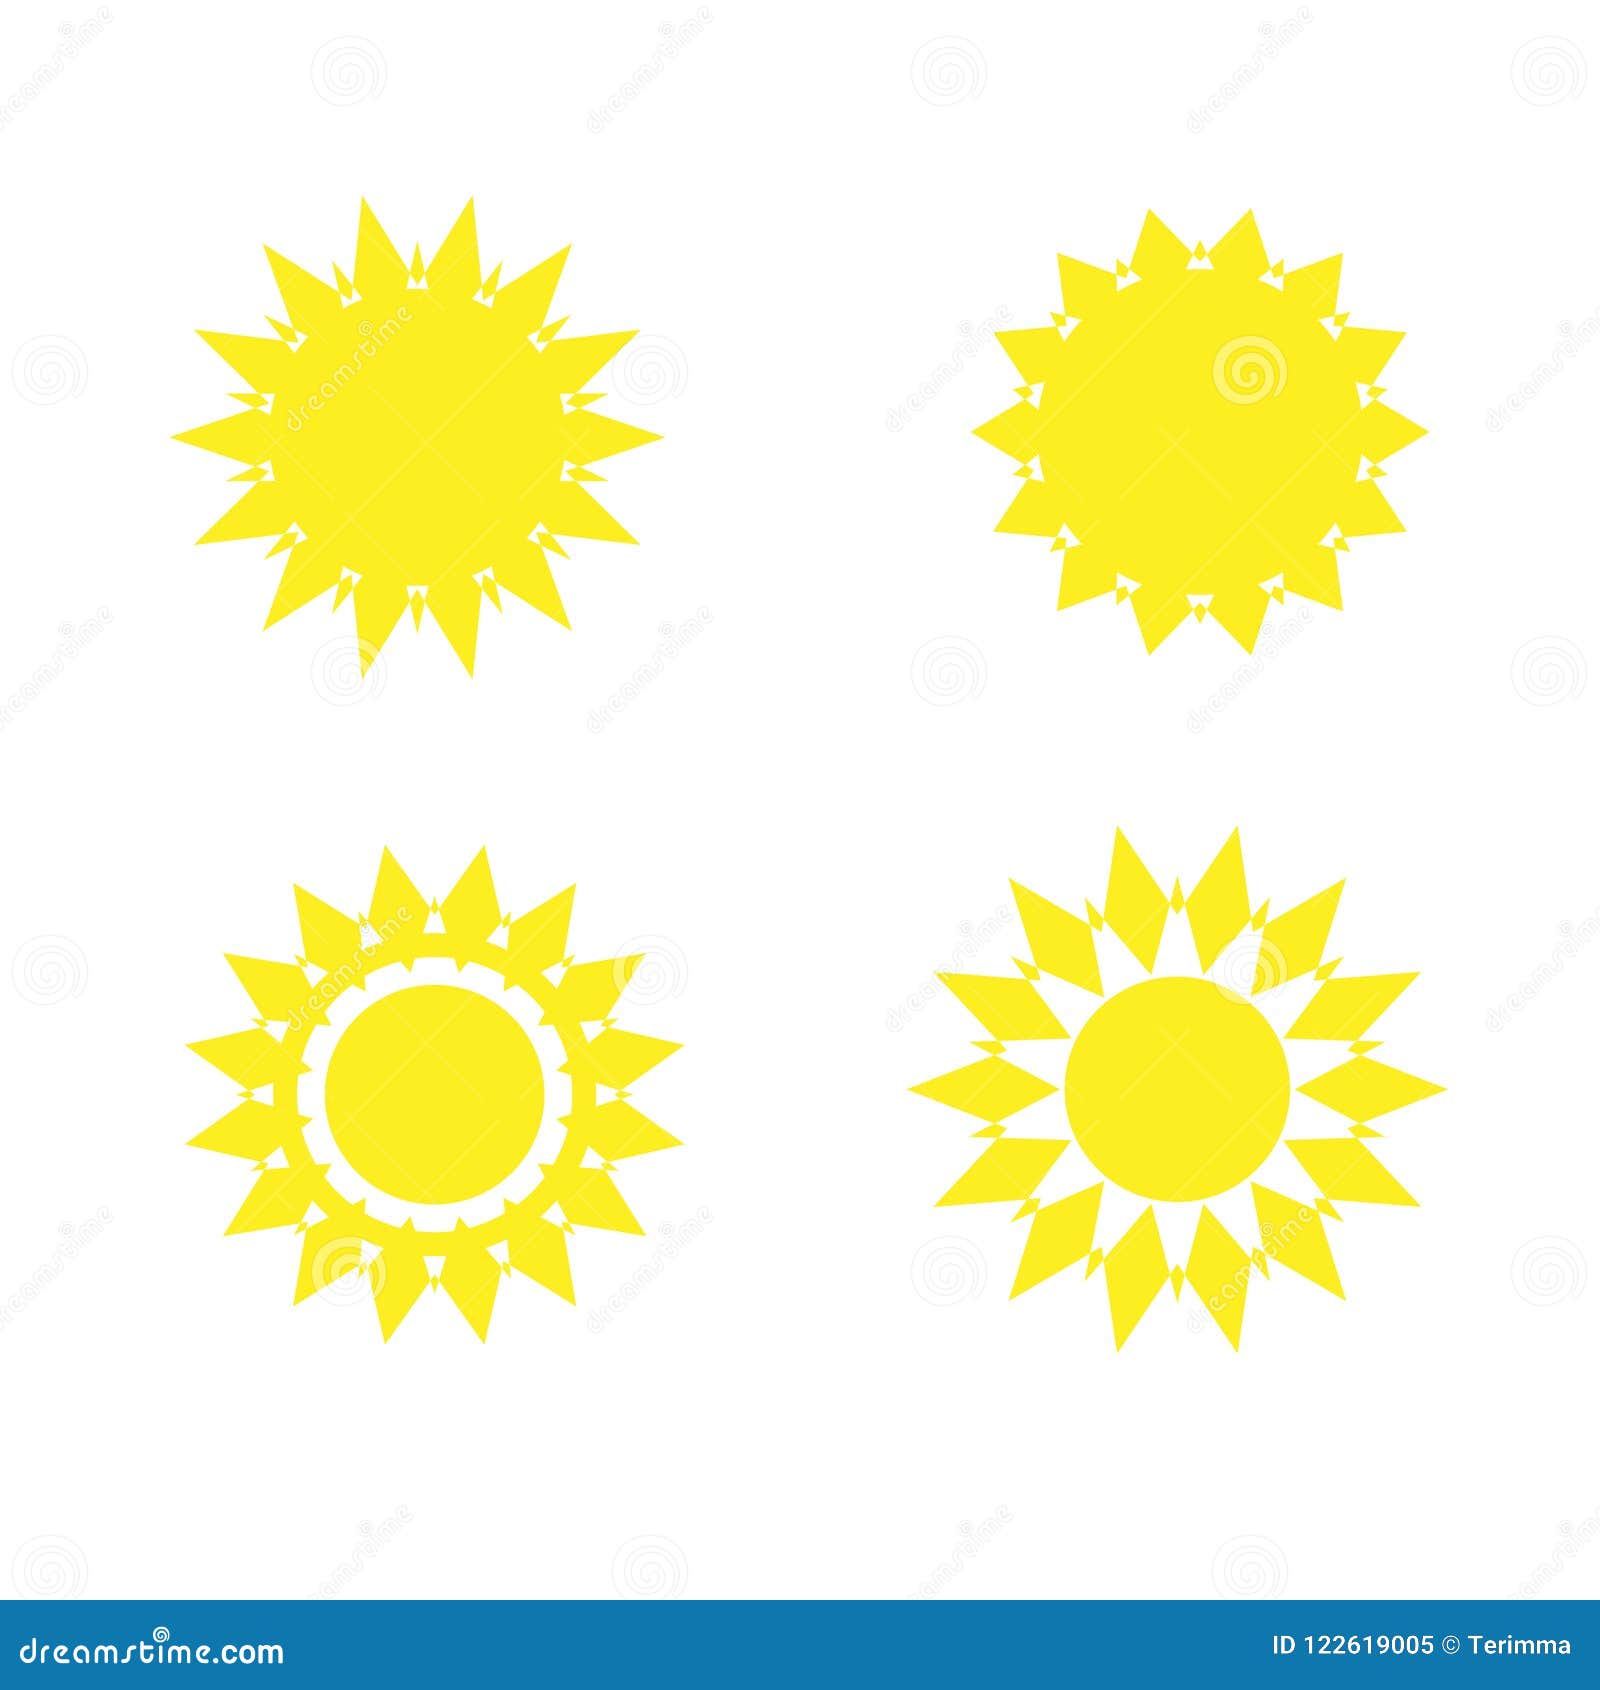 Suns icons stock vector. Illustration of design, heat - 122619005